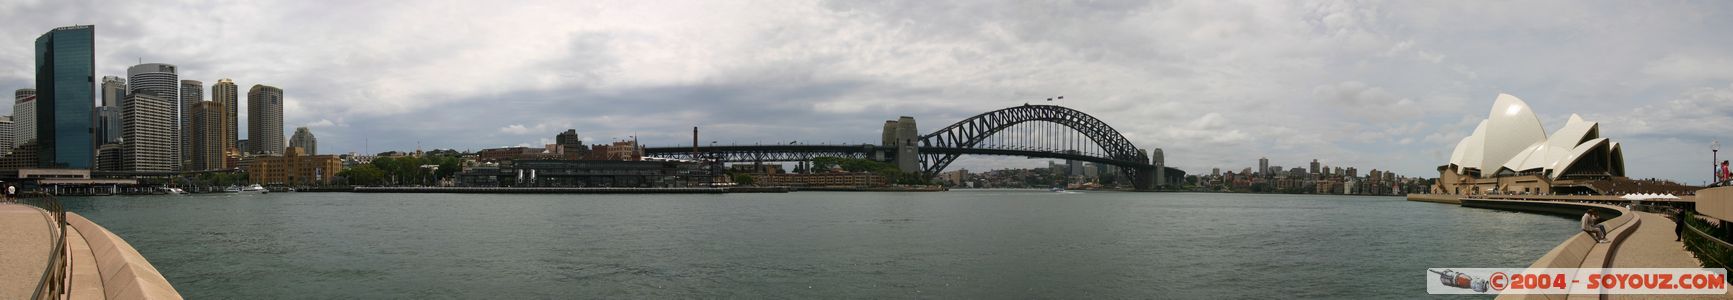 Sydney - Circular Quay, Harbour Bridge and Opera House panorama
Mots-clés: patrimoine unesco Opera House Harbour Bridge